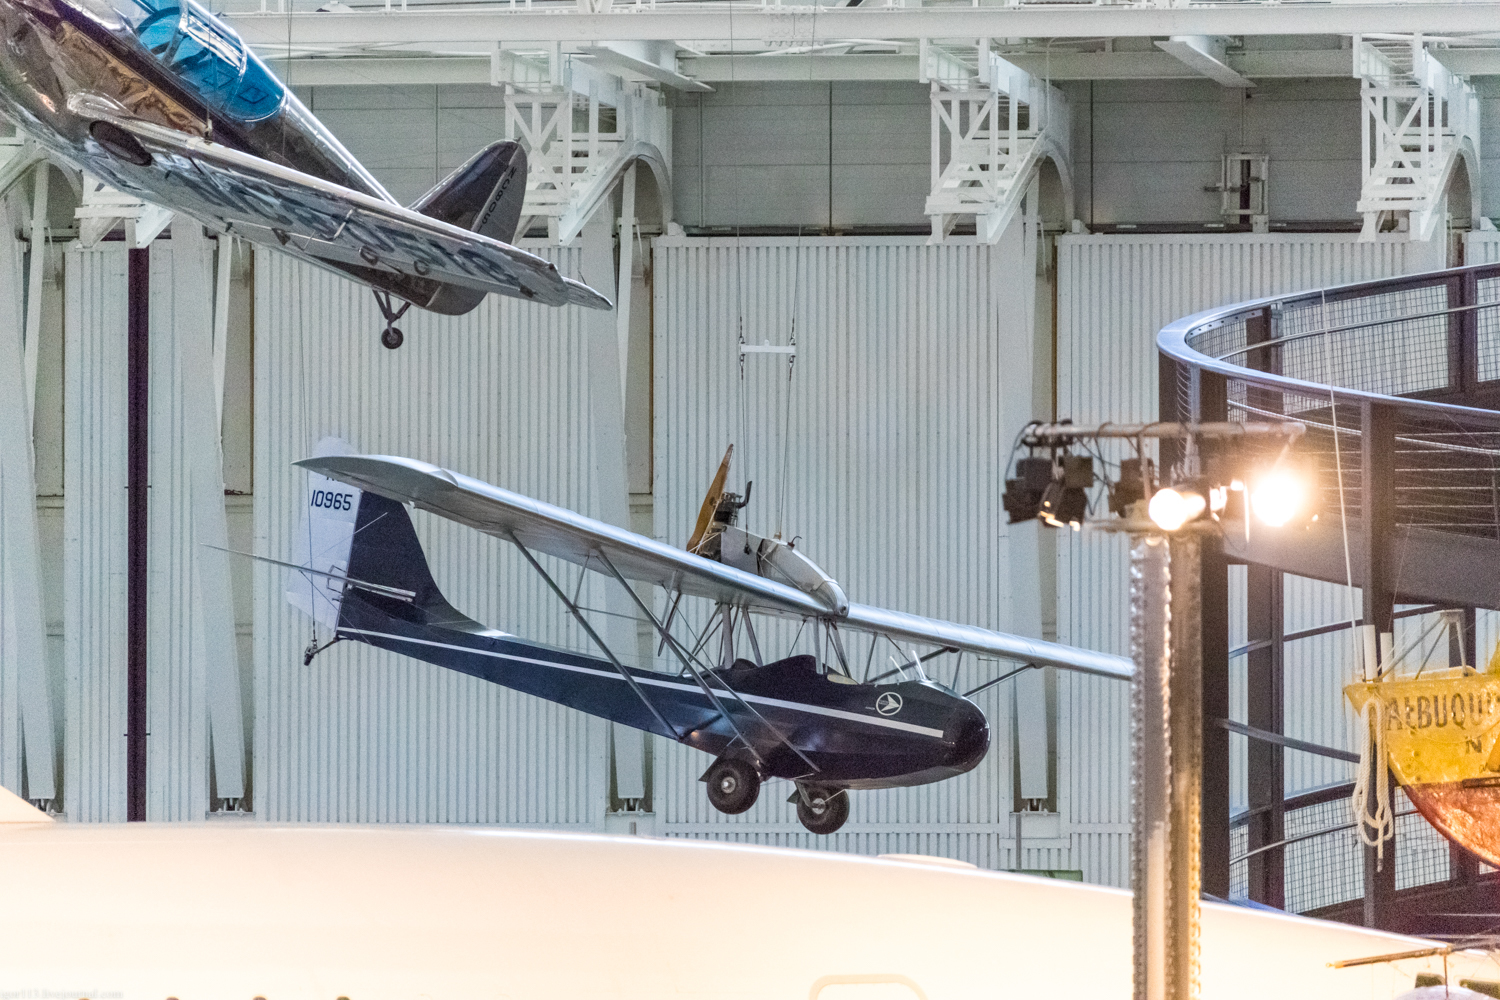  Steven f udvar-hazy center, 2018 год: легкий самолет Curtiss-Wright CW-1 